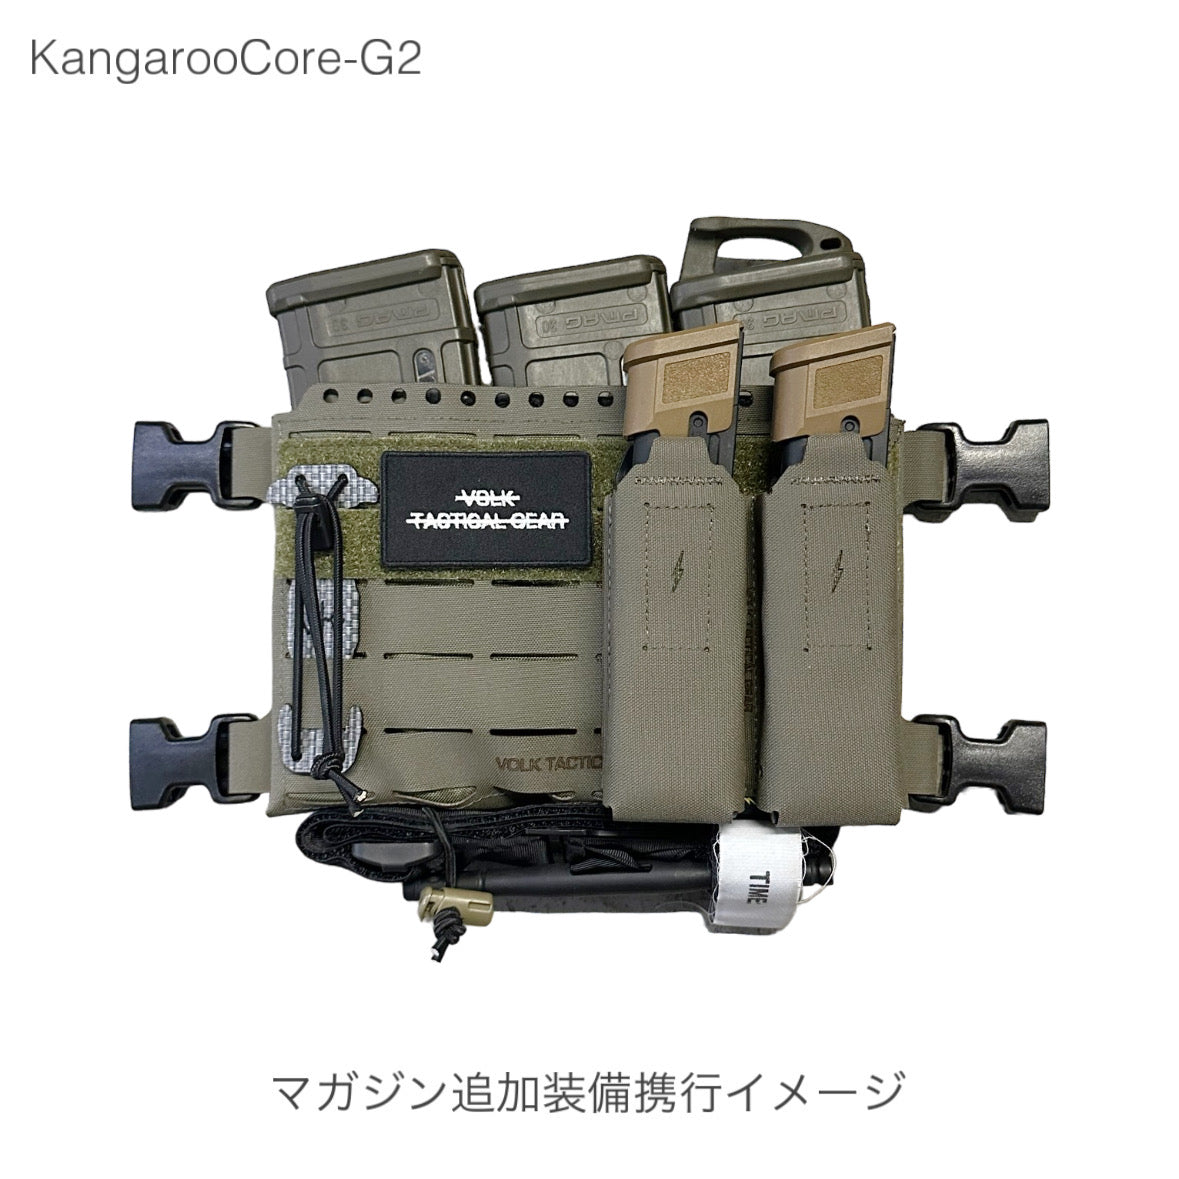 KangarooCore-G2 – VOLK TACTICAL GEAR